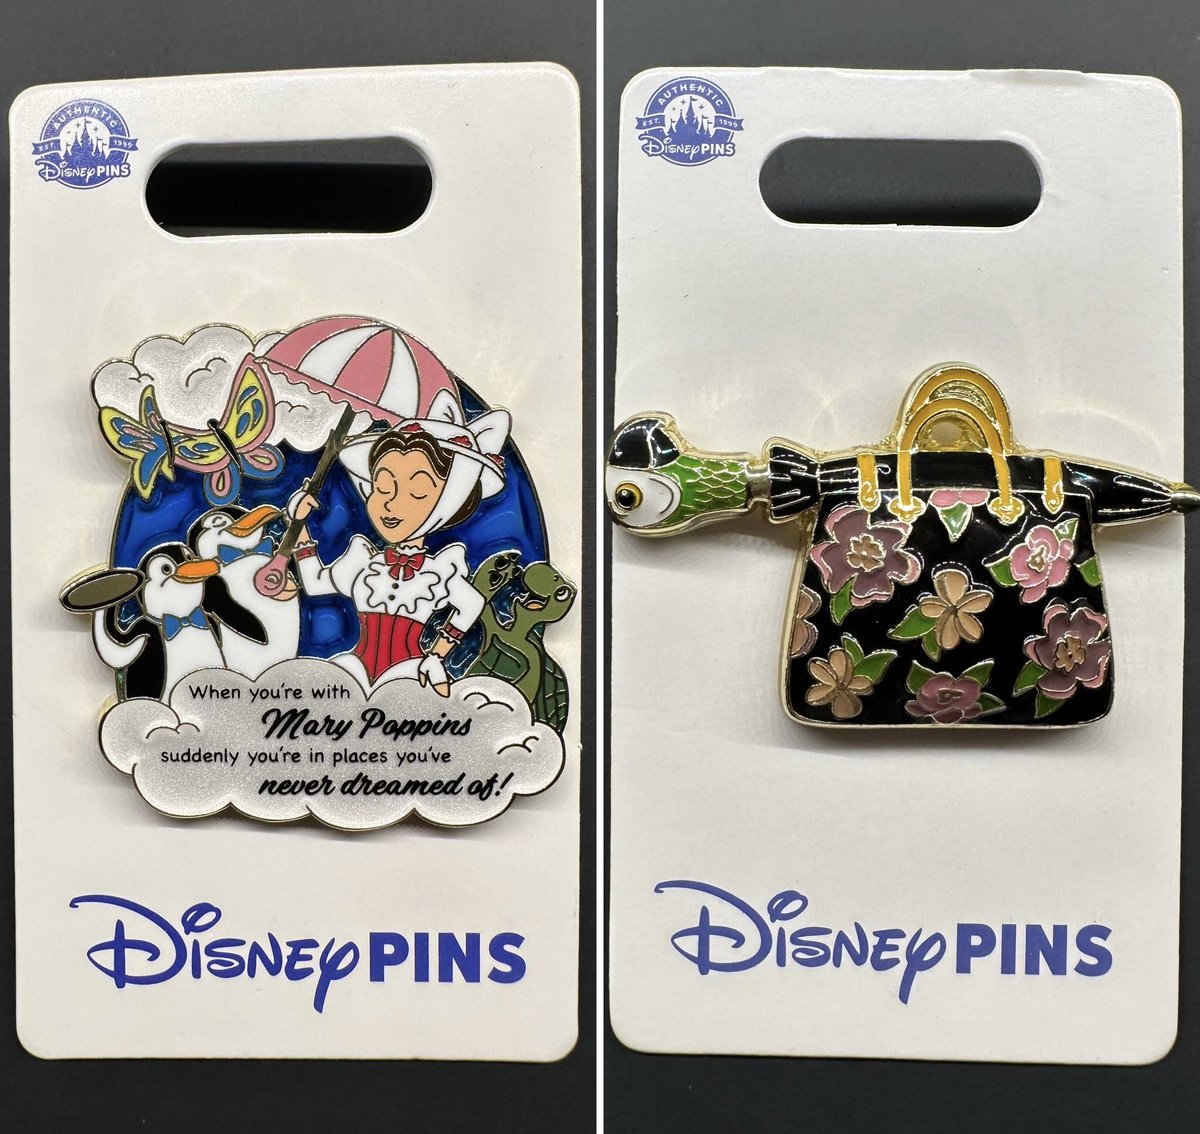 New Mary Poppins open edition pins at Disney Parks! disneypinsblog.com/new-disney-pin…